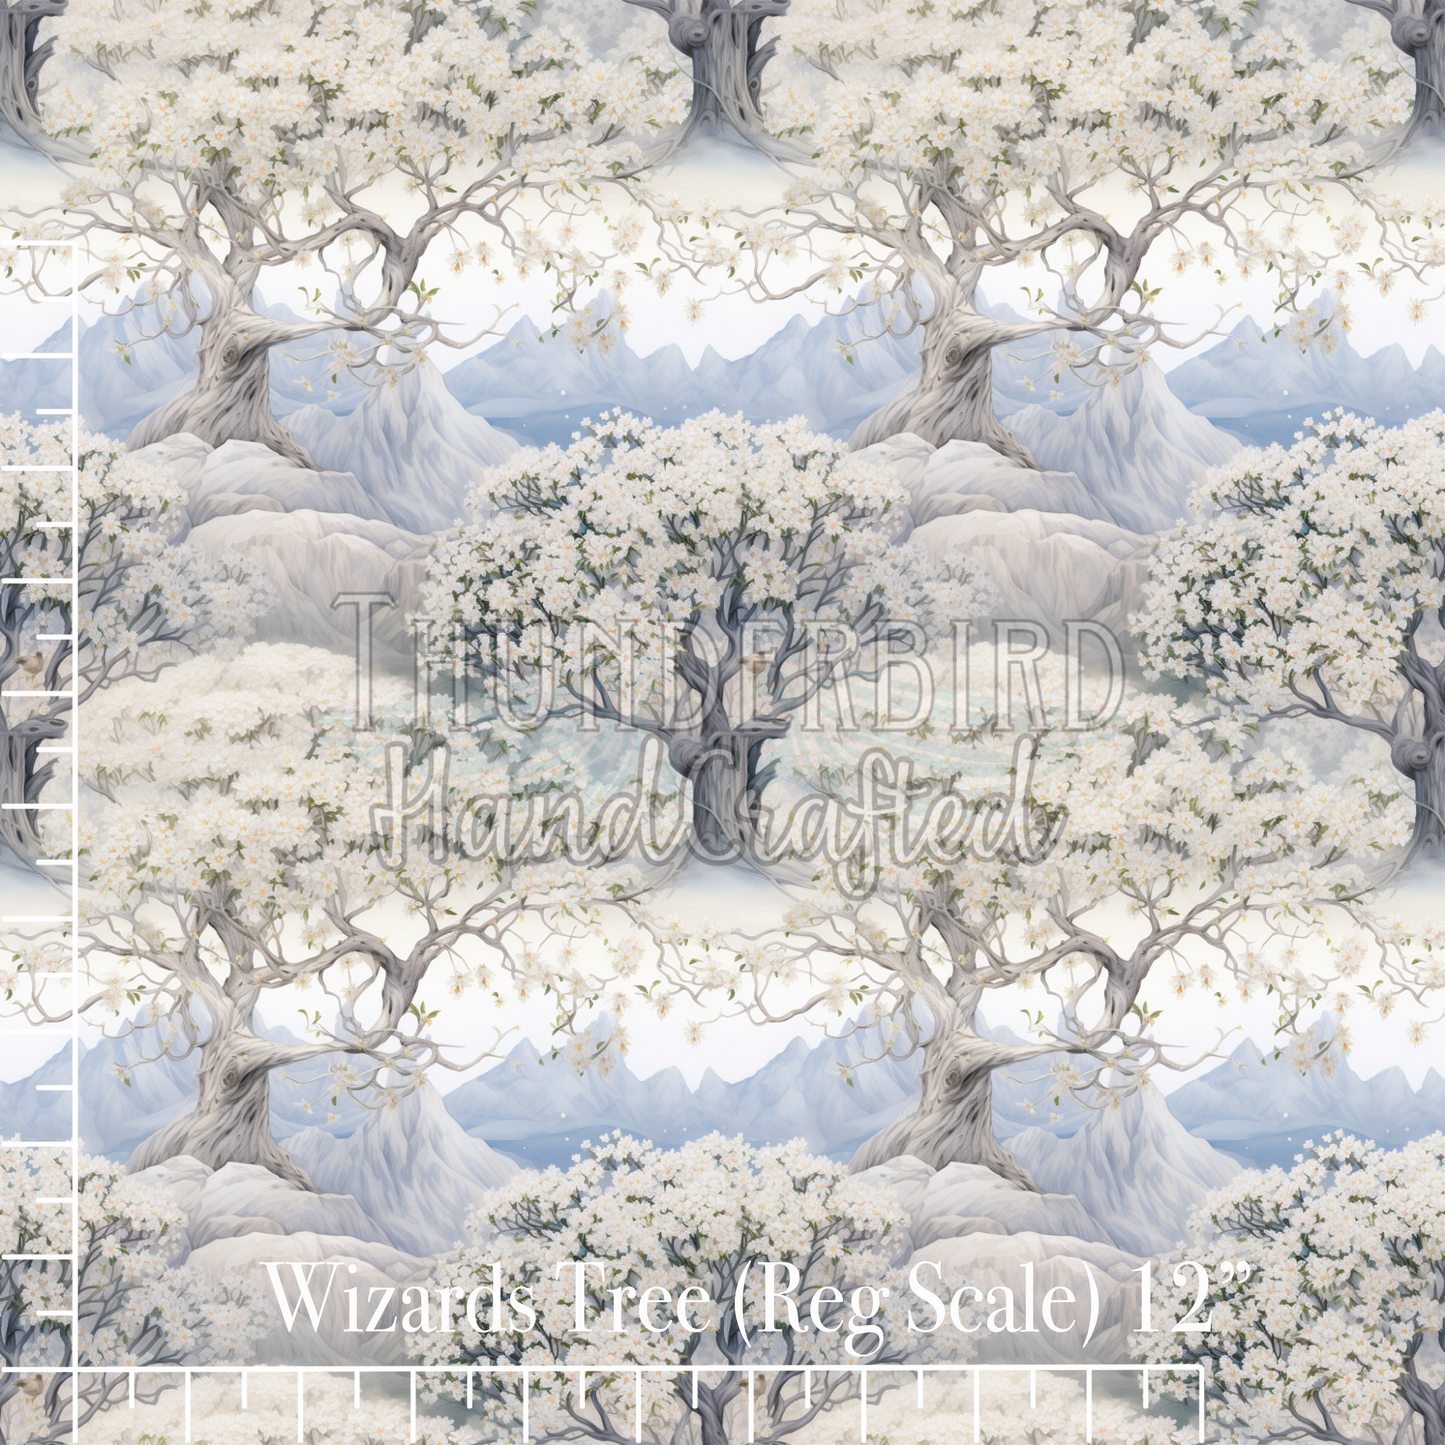 White Wizard Tree (Reg Scale)